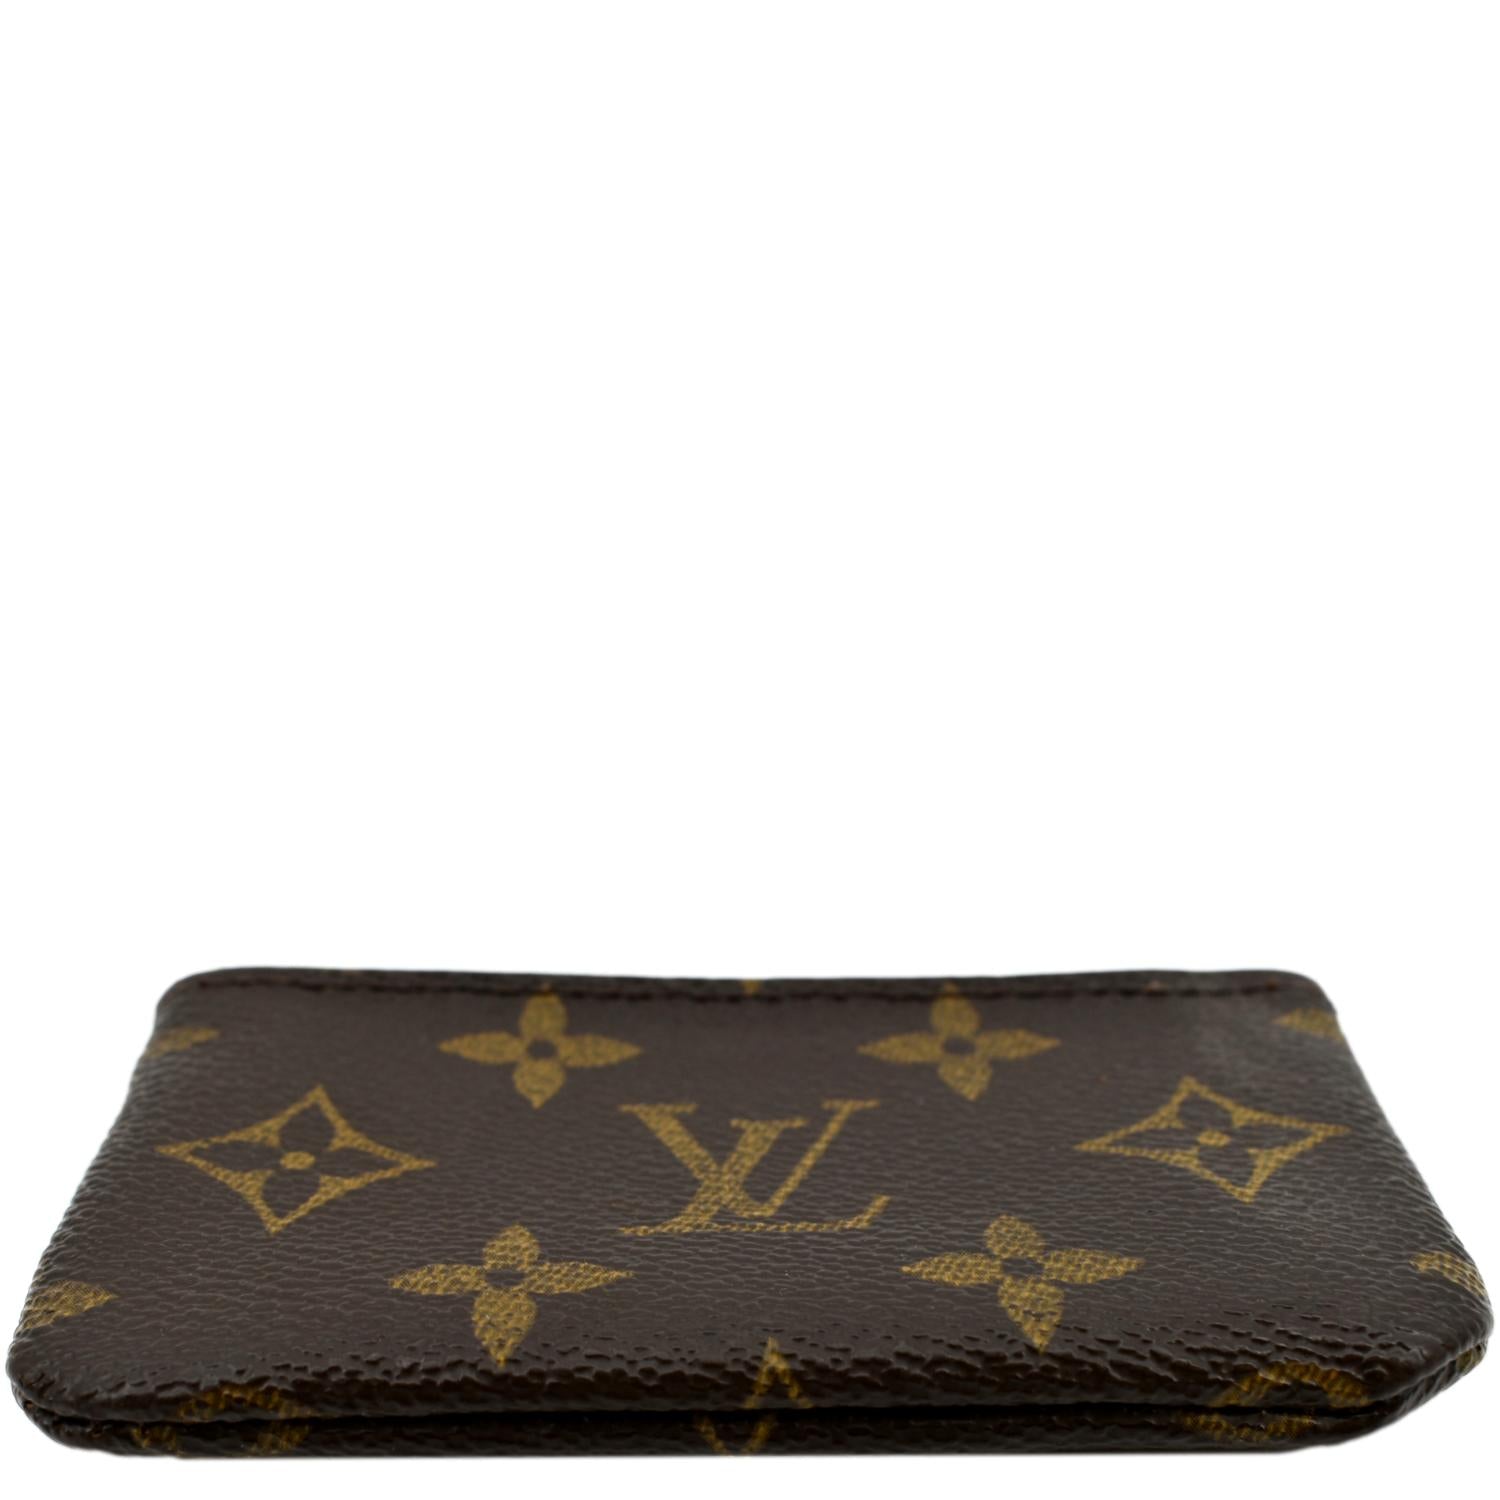 Louis Vuitton Monogram Canvas Key Pouch, Key Ring, handbag coin